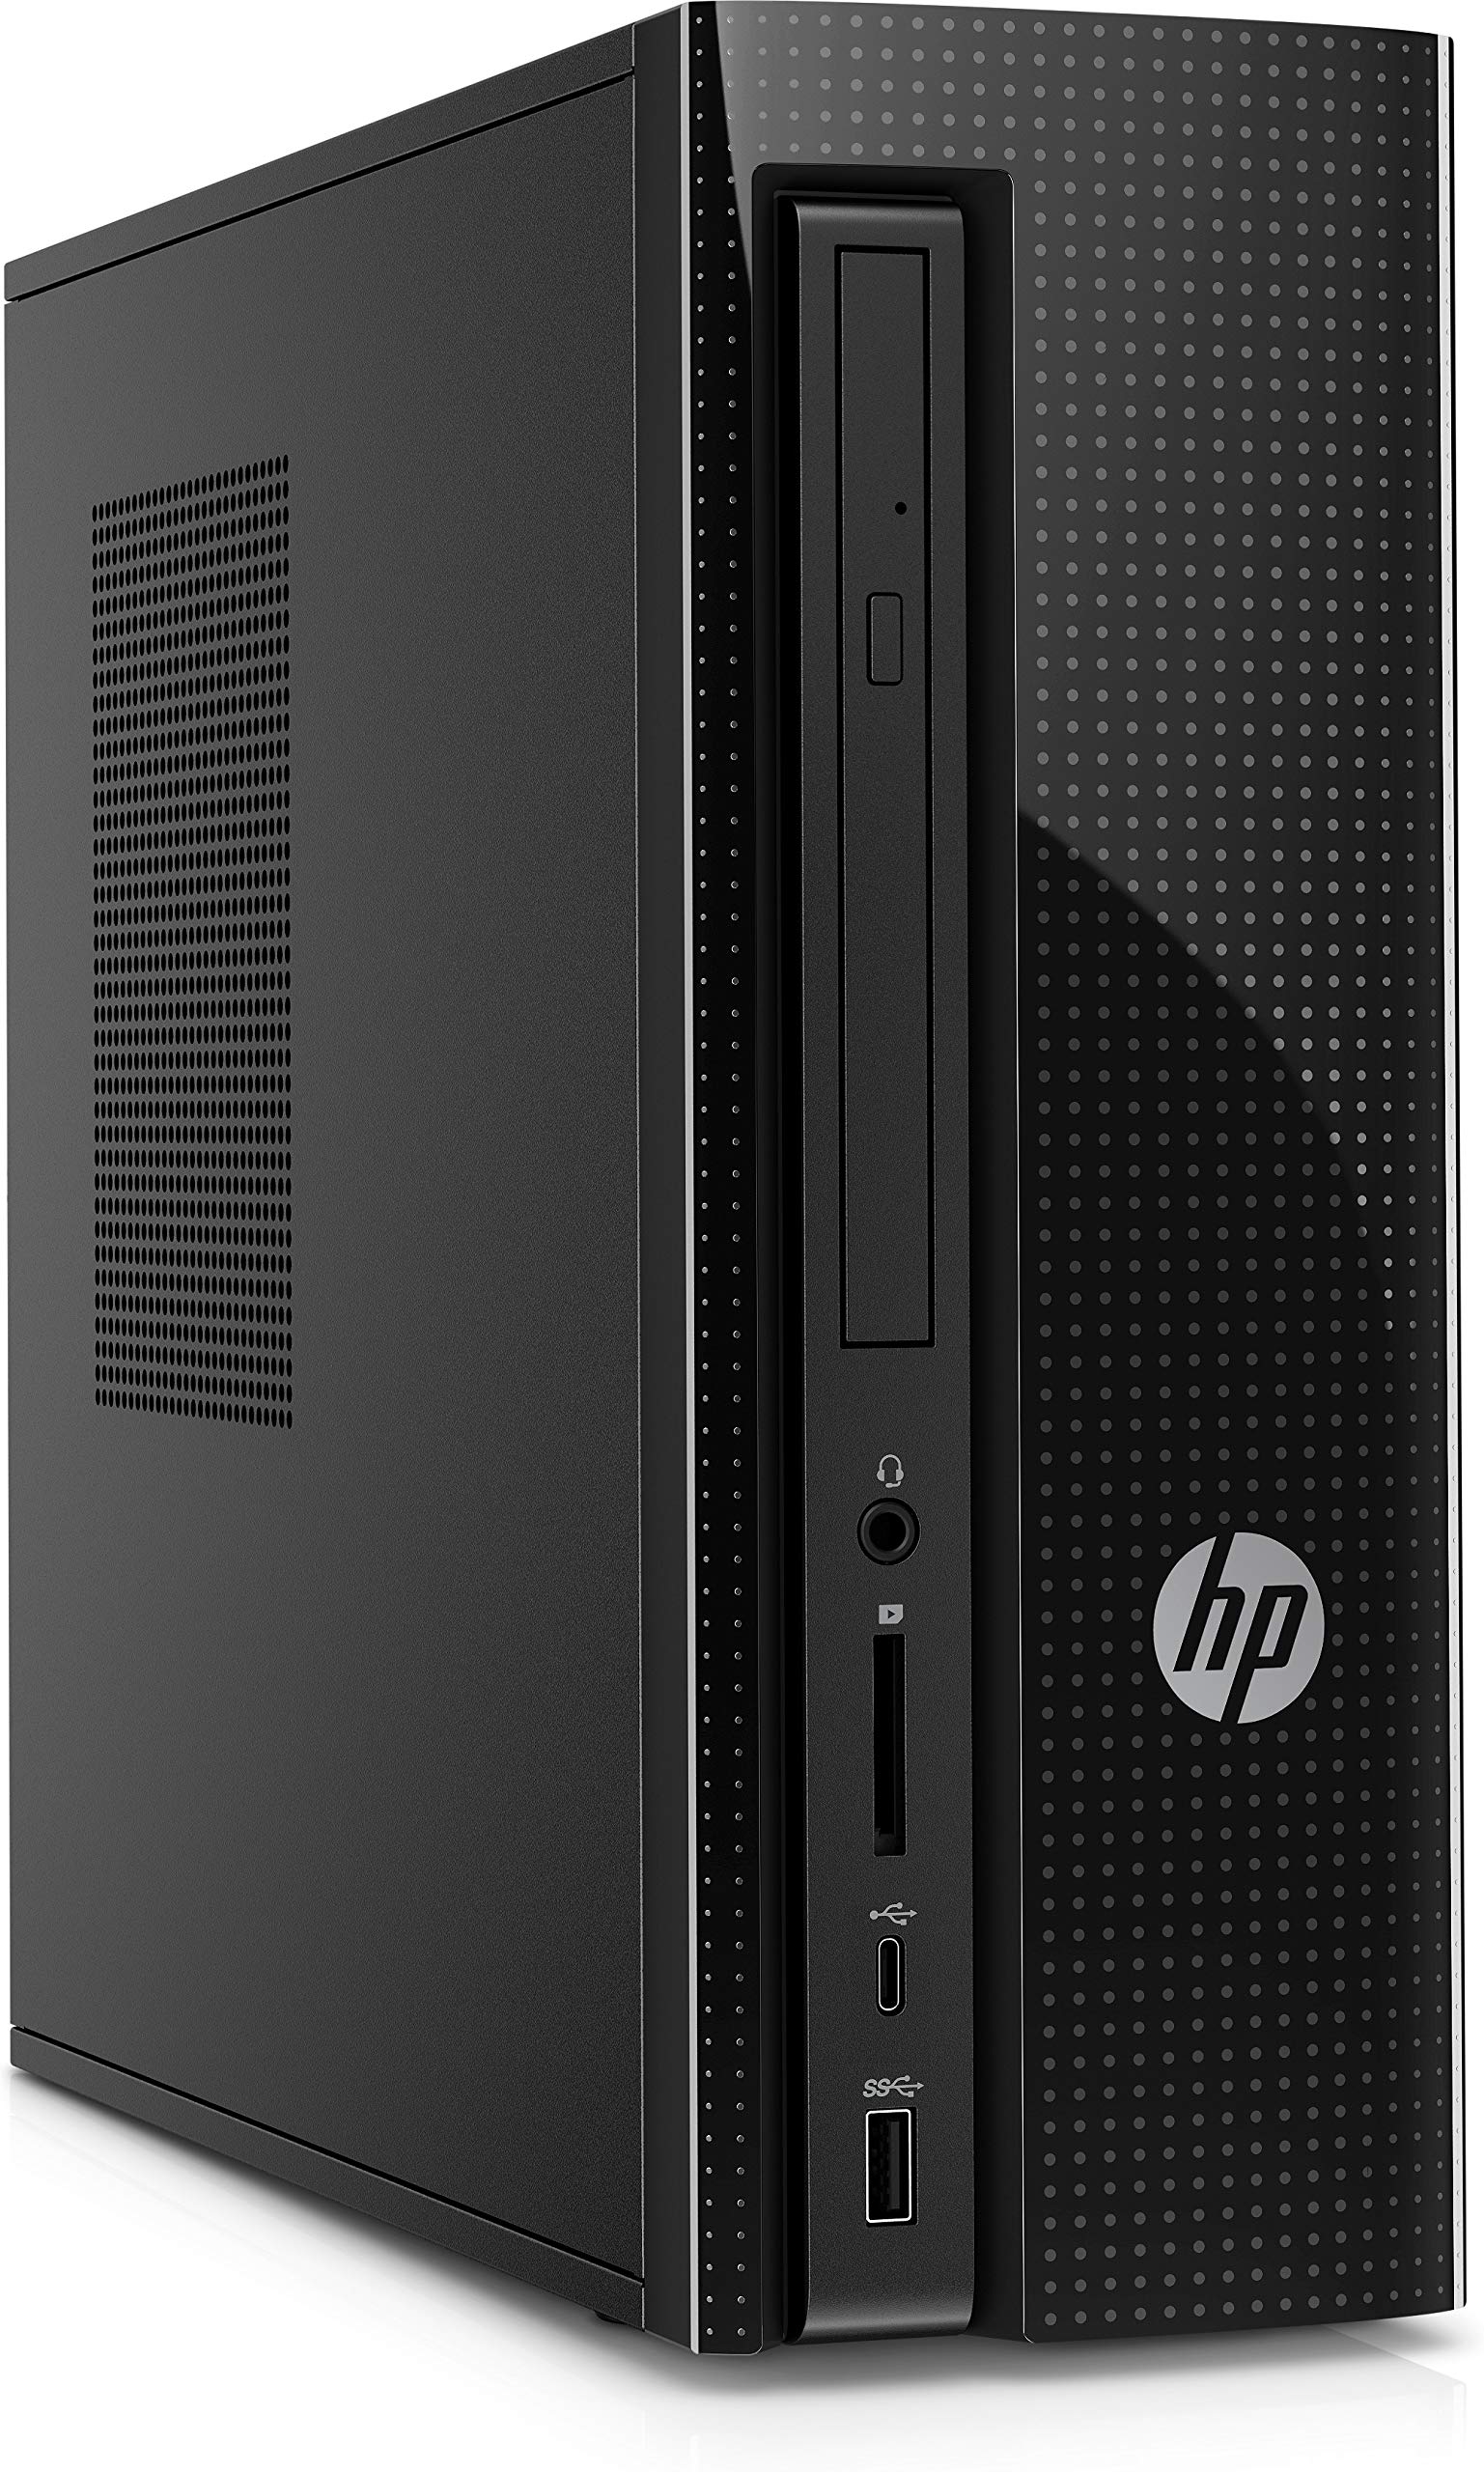 HP Slimline 270-p033w Desktop Tower, Intel Celeron G3930 CPU, 4GB RAM, 500GB HDD Windows 10